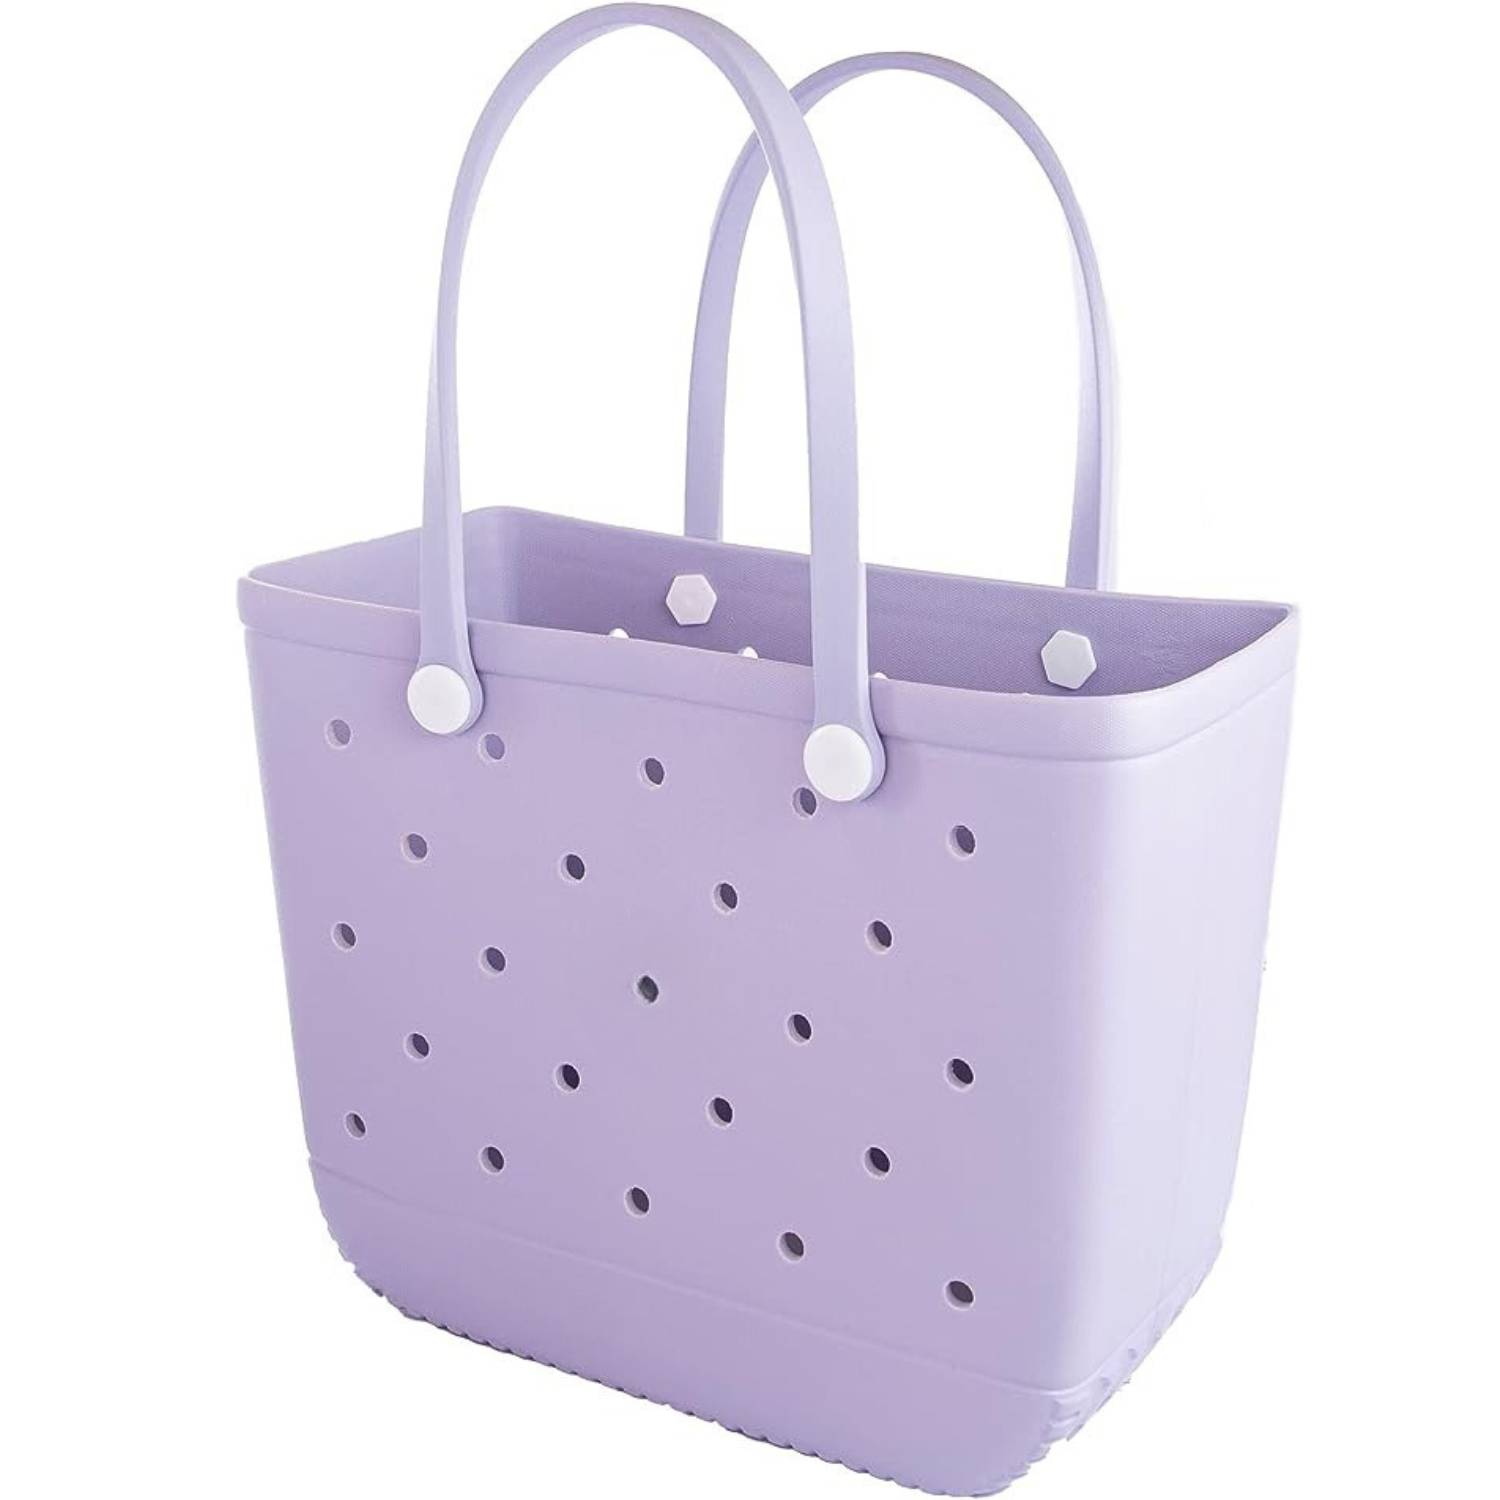 buy purple tote bag made of eva plastic